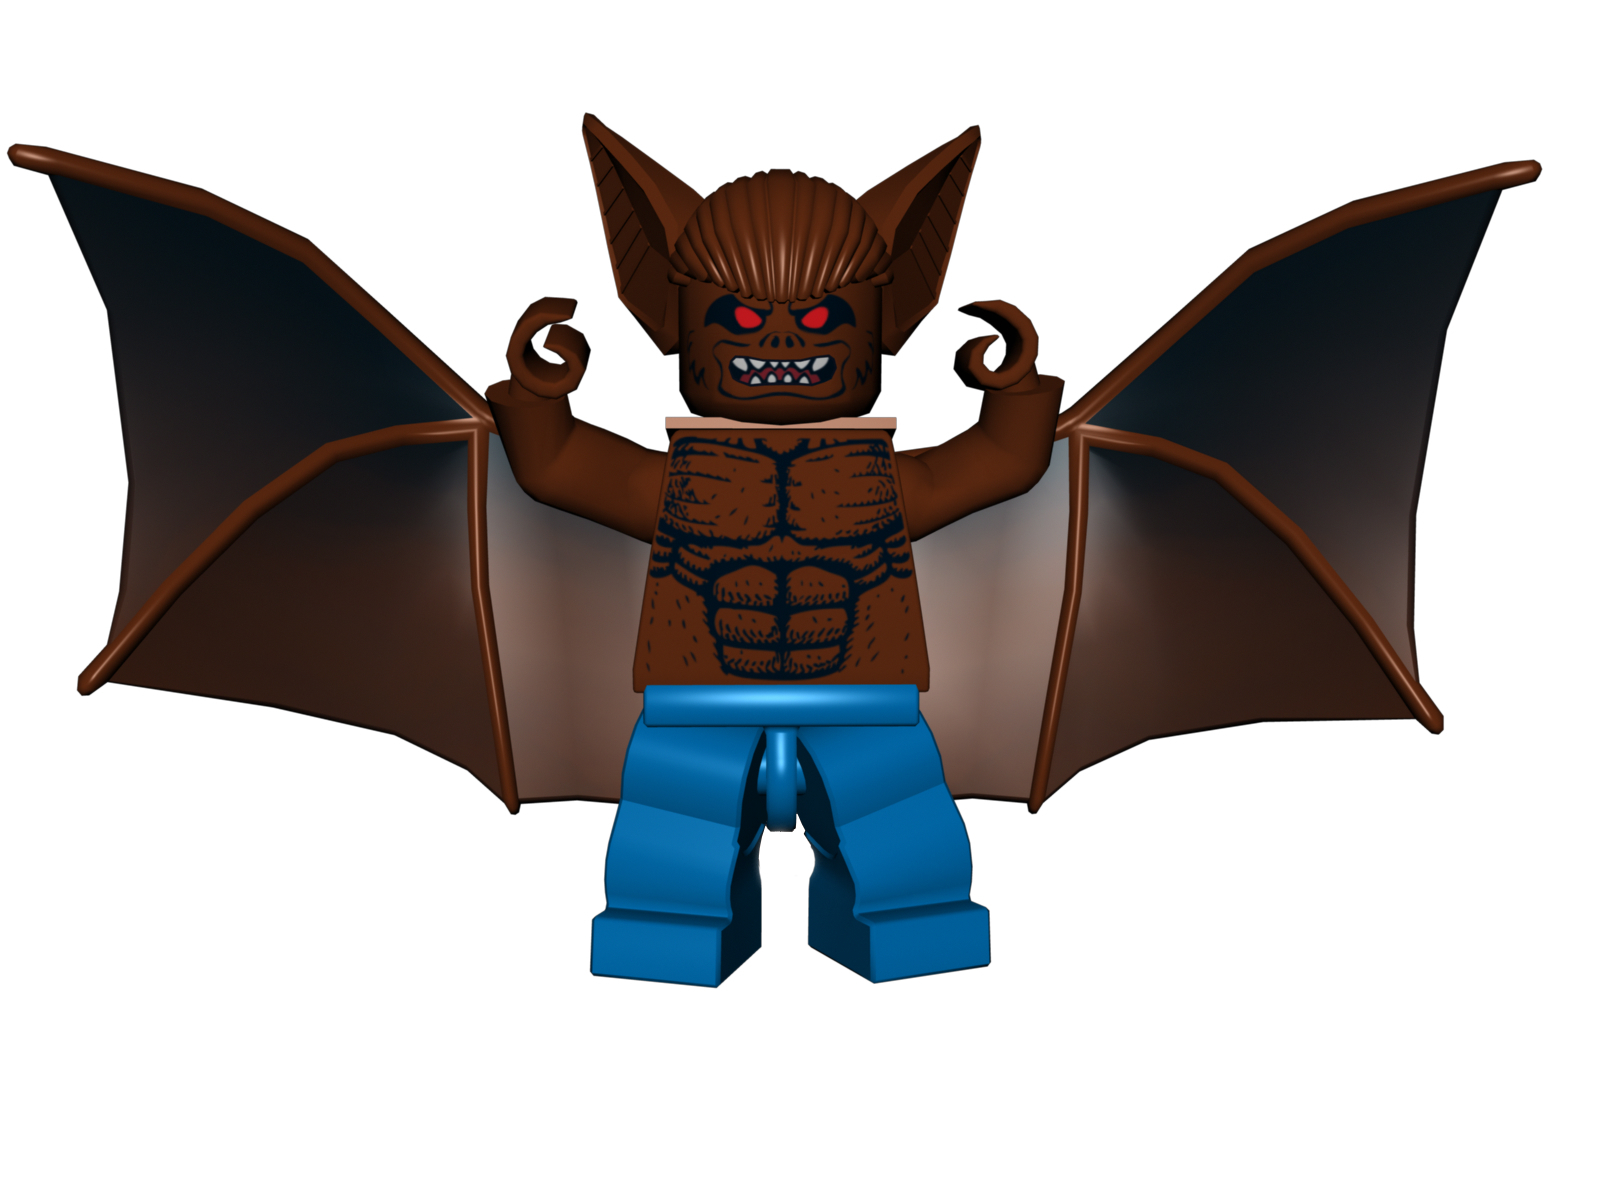 Lego Batman Characters